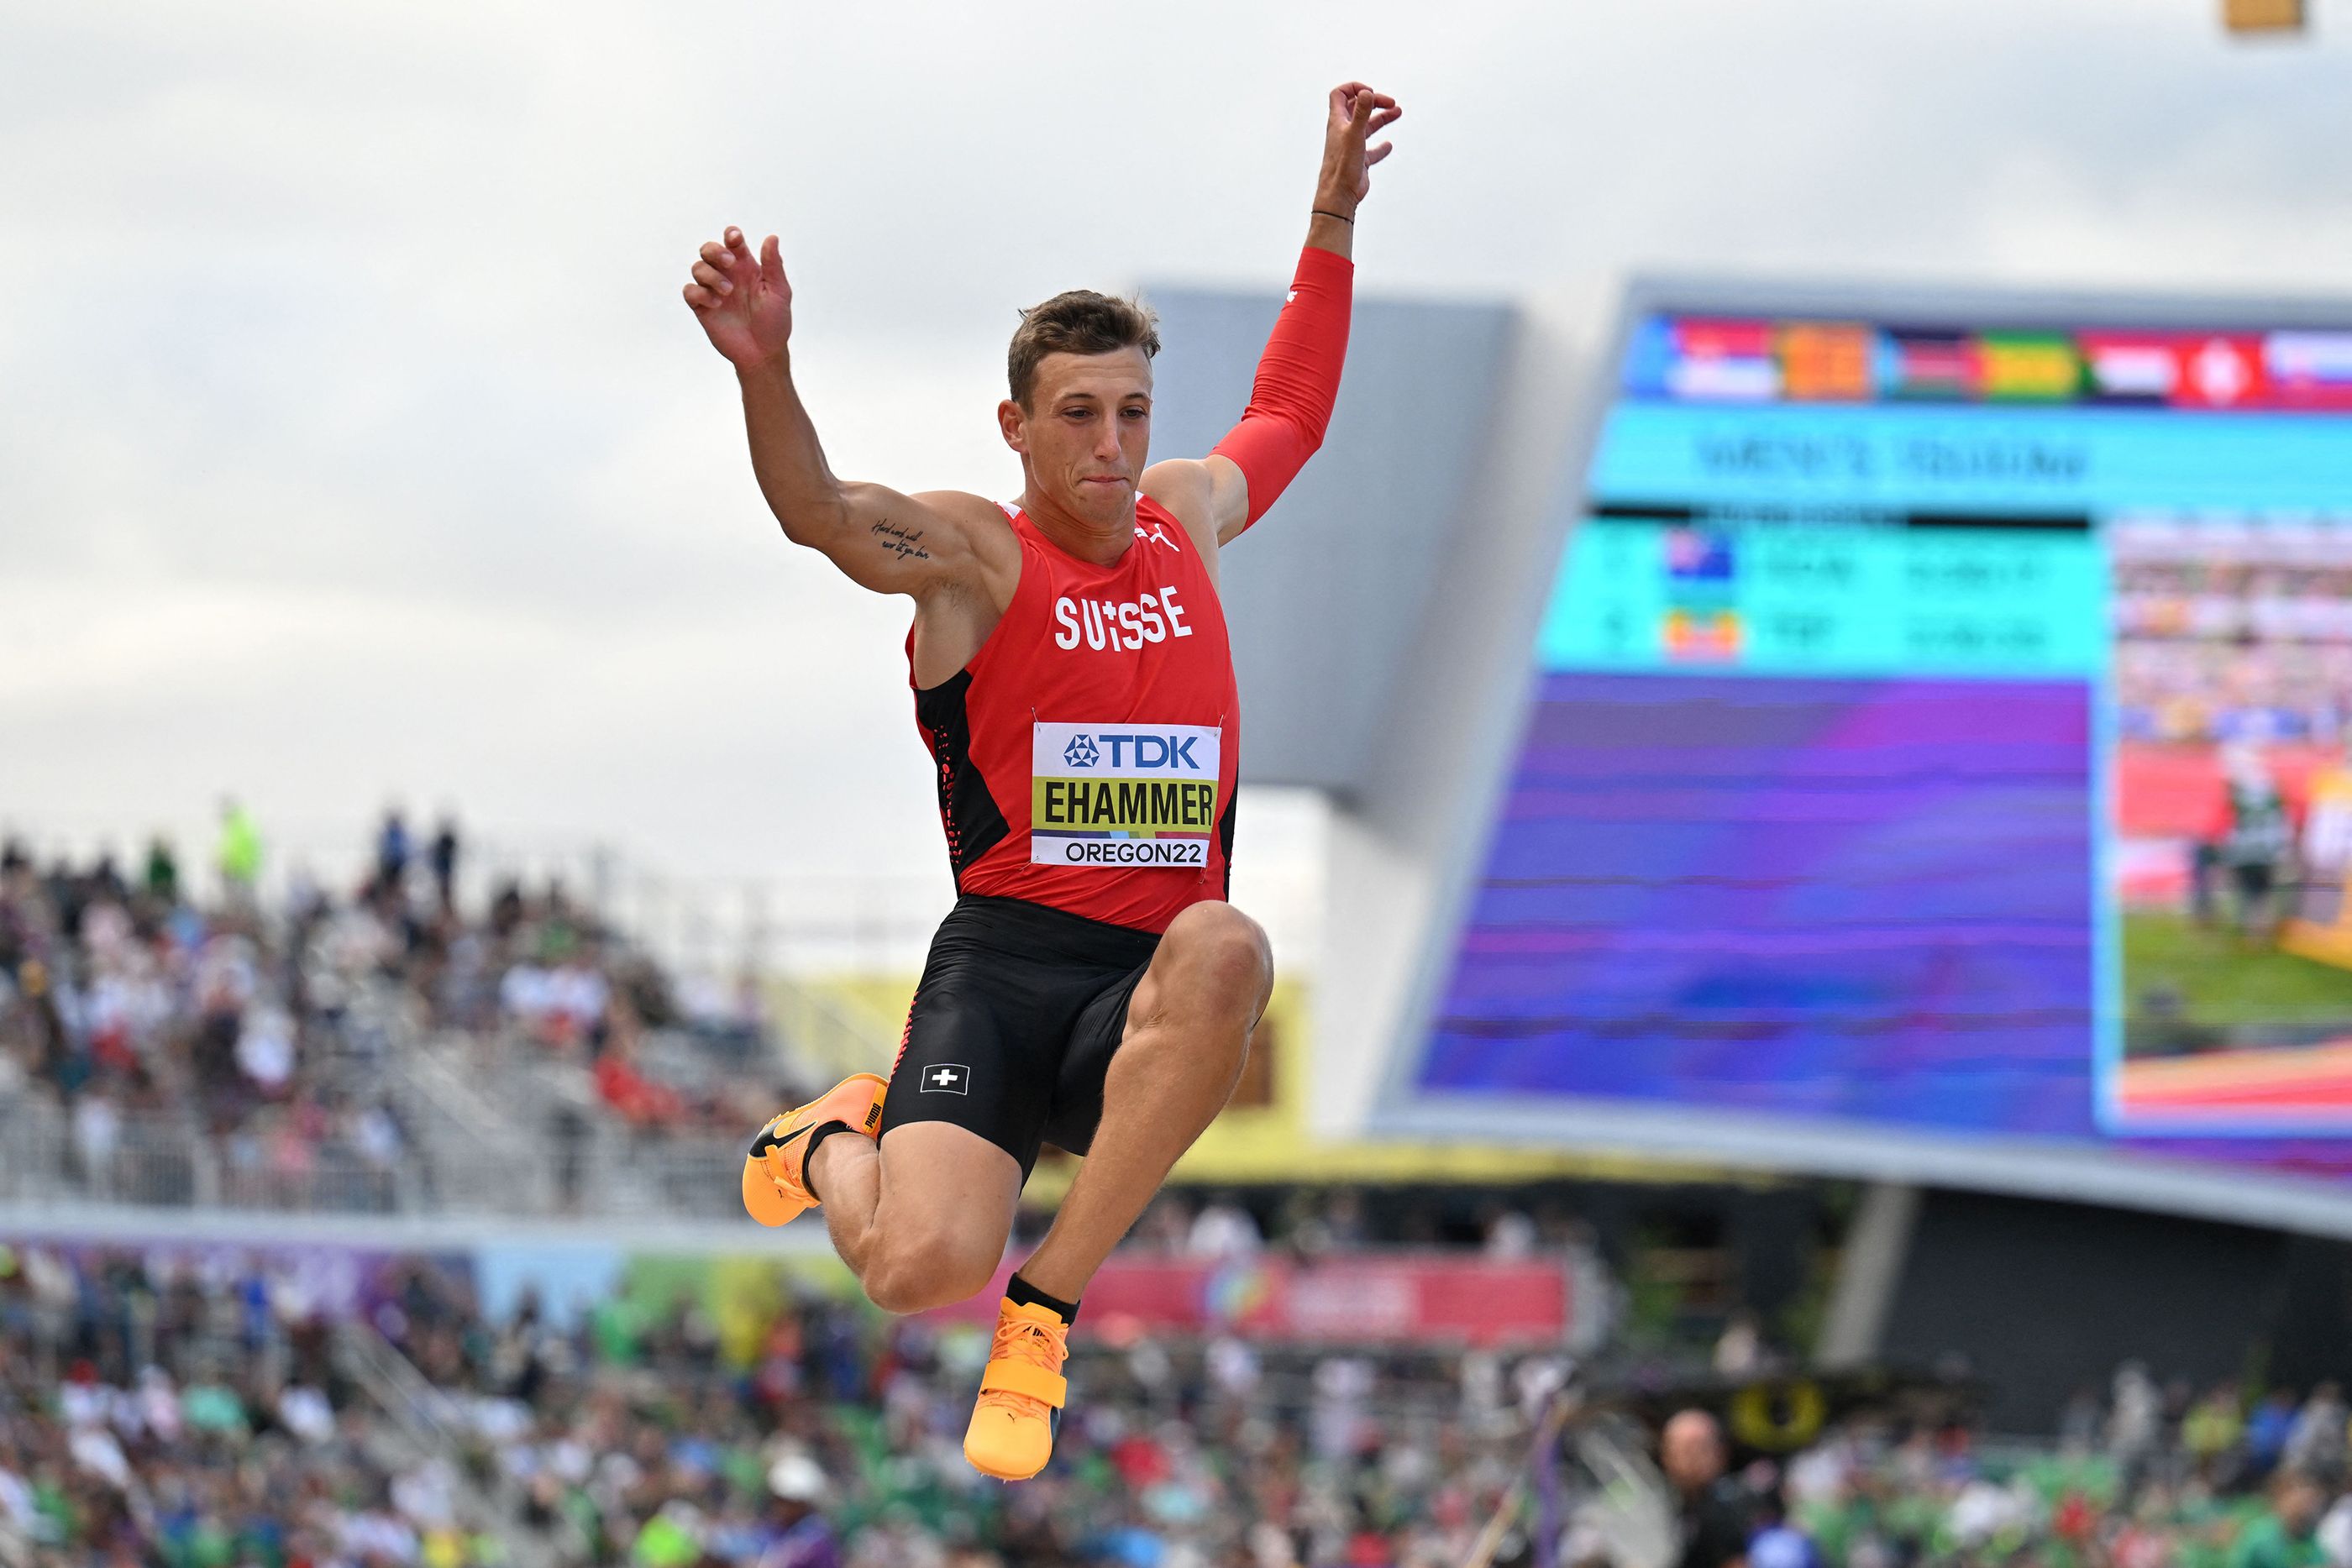 Simon Ehammer in long jump action at the World Athletics Championships Oregon22